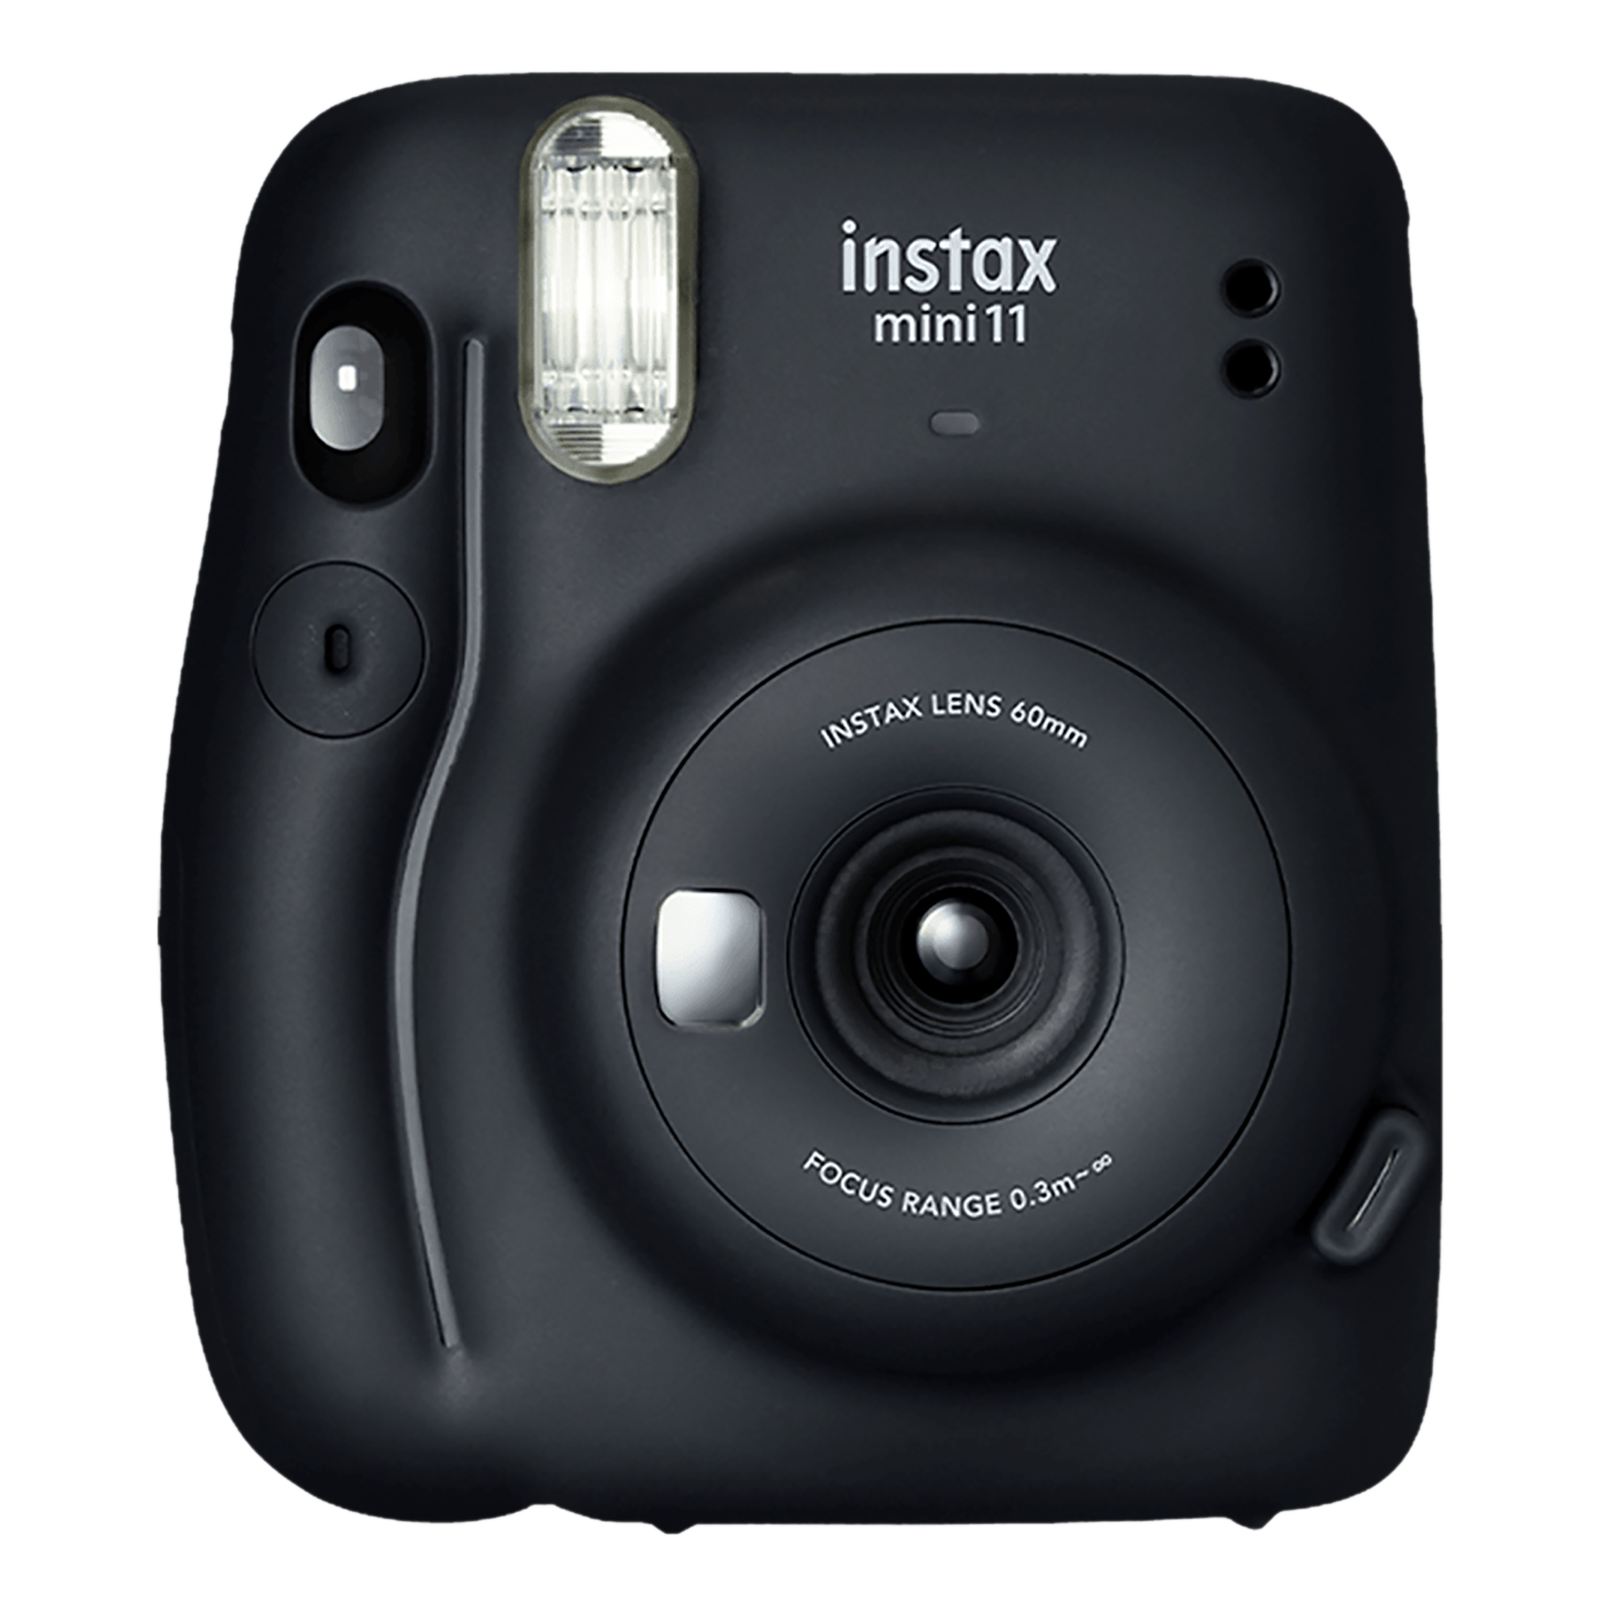 Buy FUJIFILM Instax Mini 11 Instant Camera (Ice White) Online - Croma